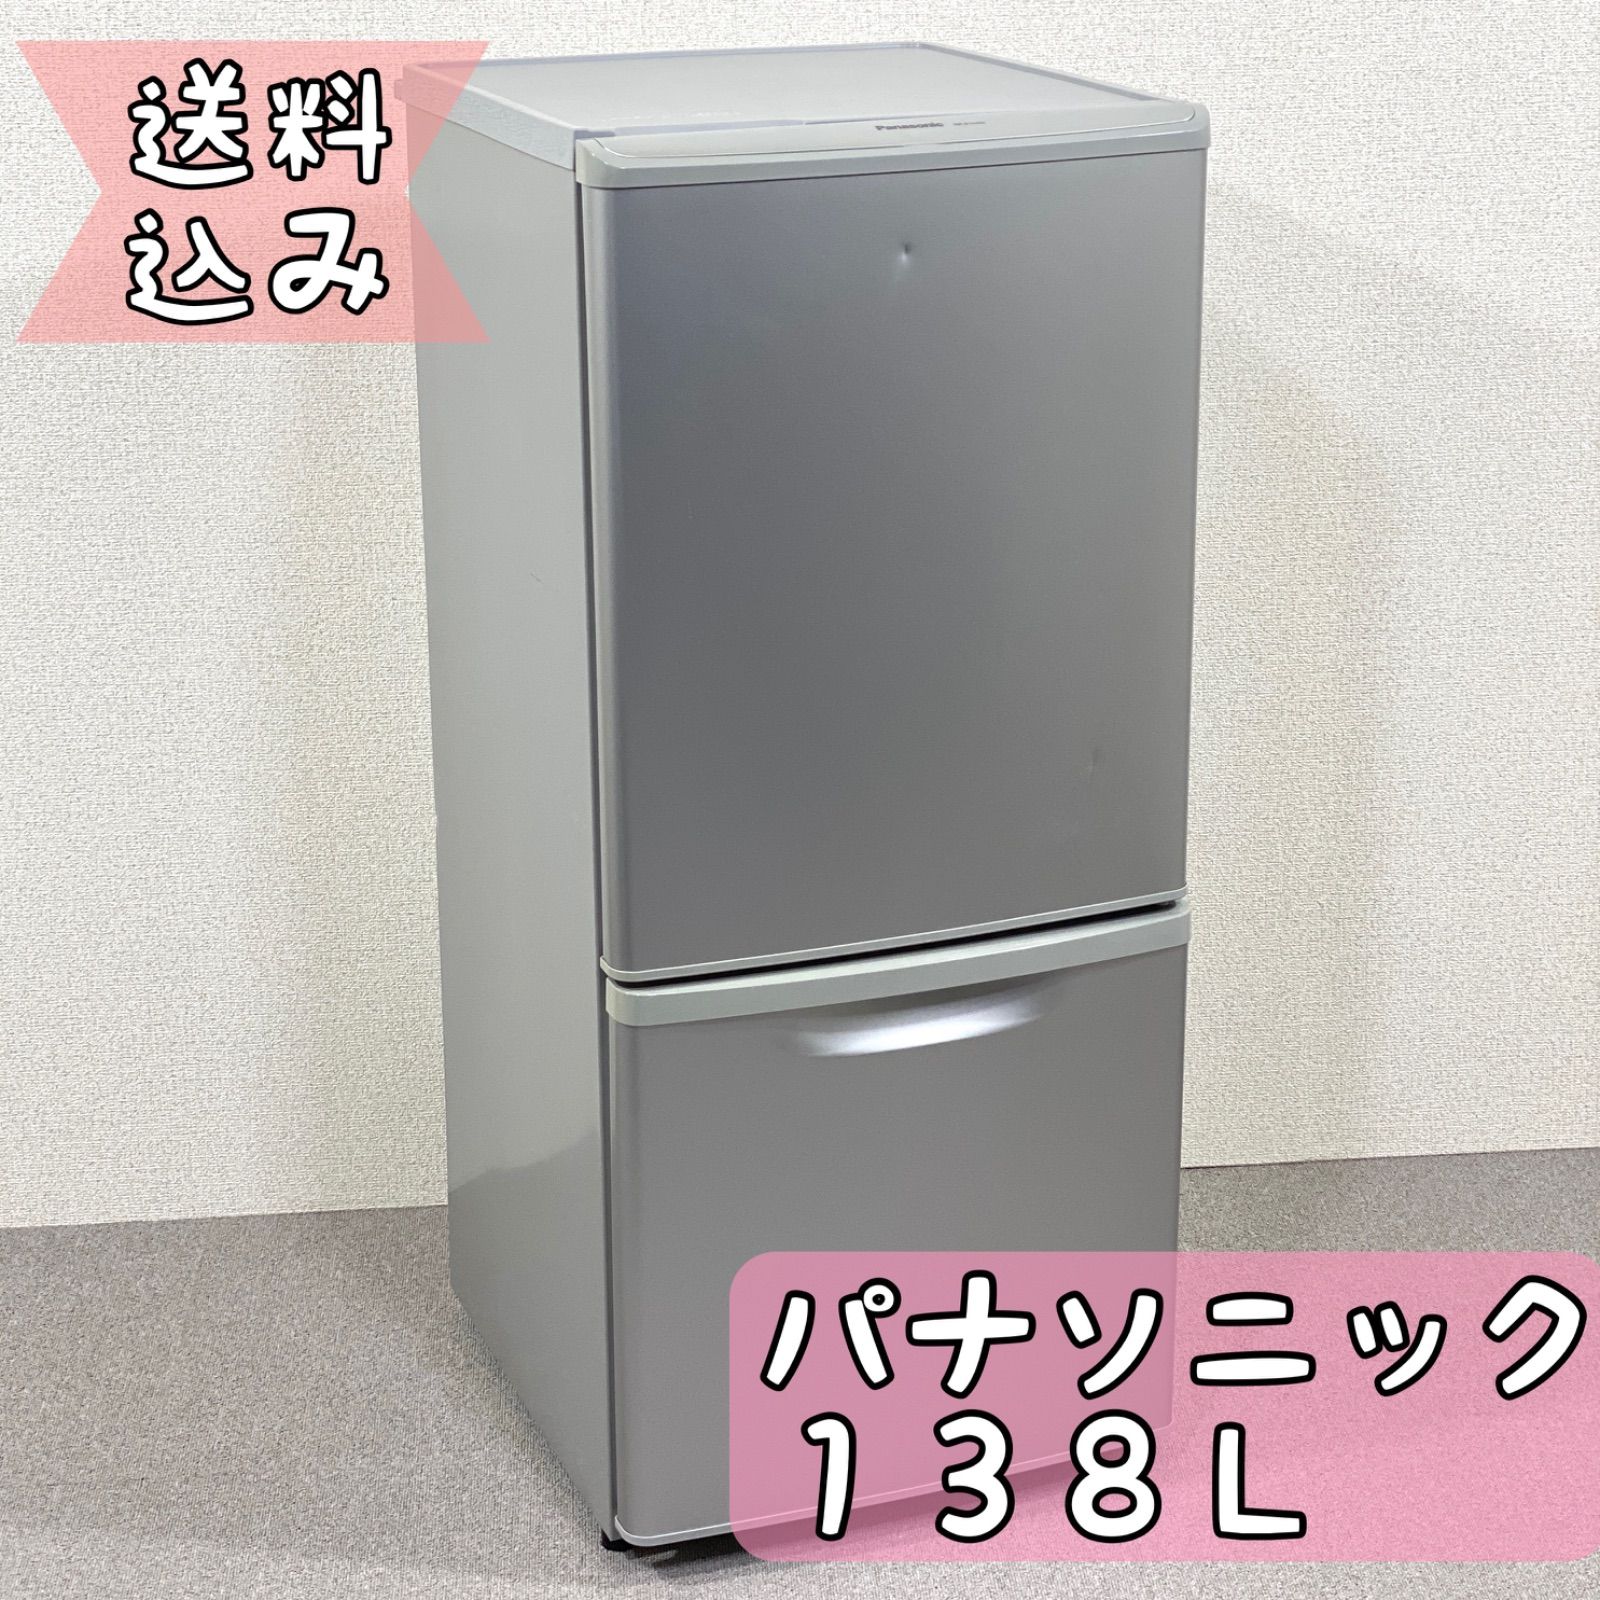 Panasonic(パナソニック) 冷凍冷蔵庫138L 一人暮らし 小型